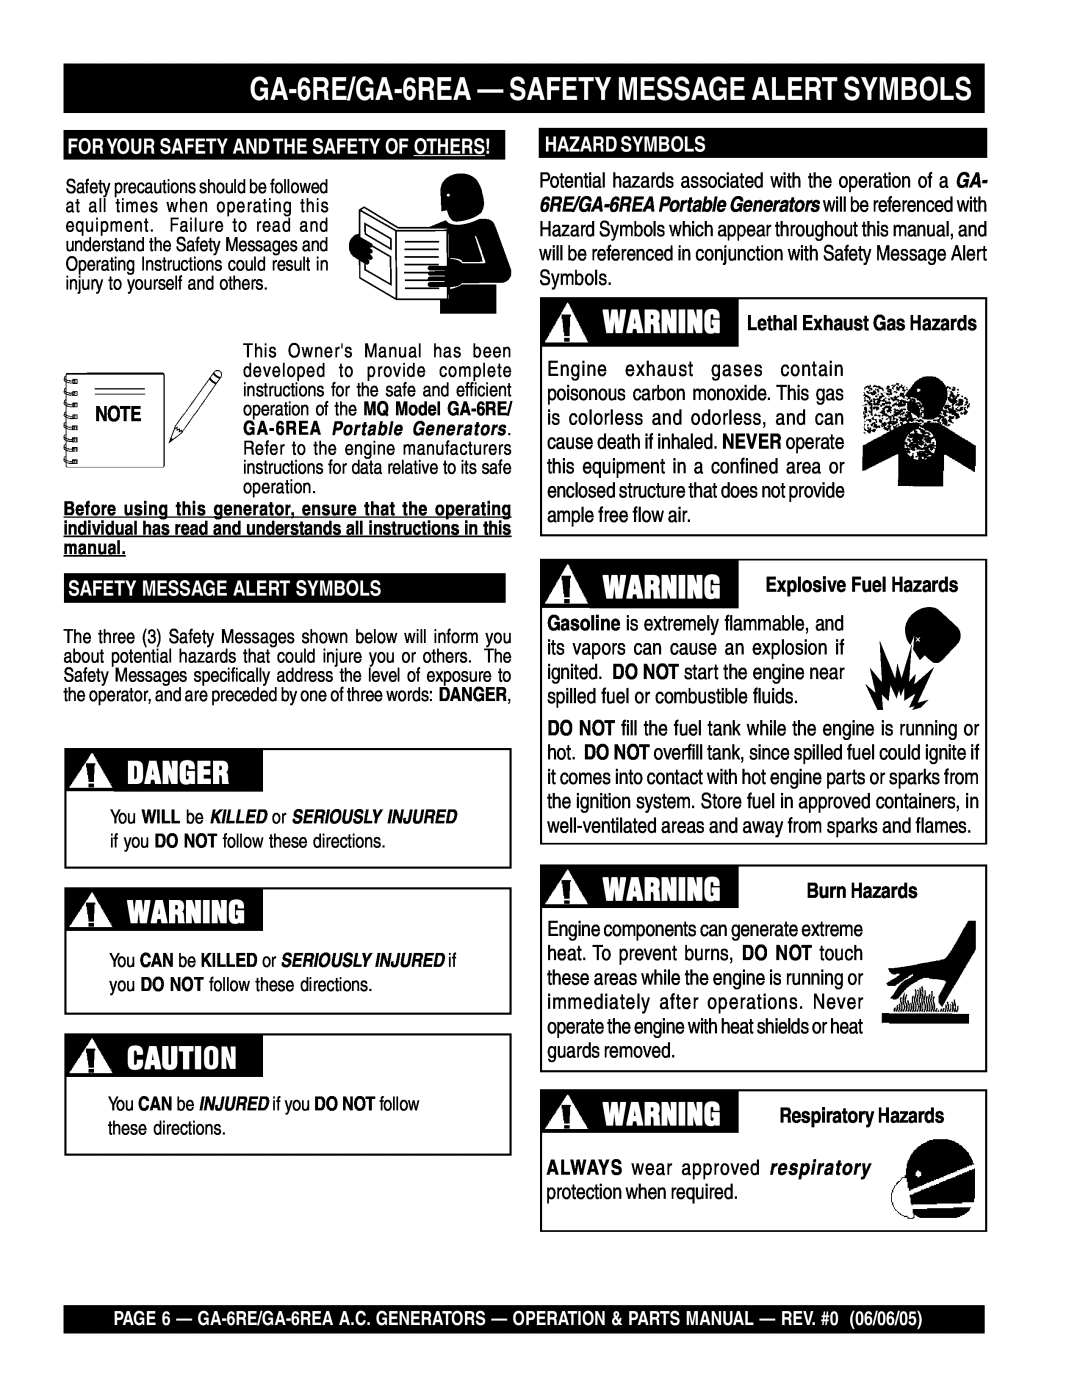 Multiquip manual Danger, GA-6RE/GA-6REA- SAFETY MESSAGE ALERT SYMBOLS, Hazard Symbols, Safety Message Alert Symbols 